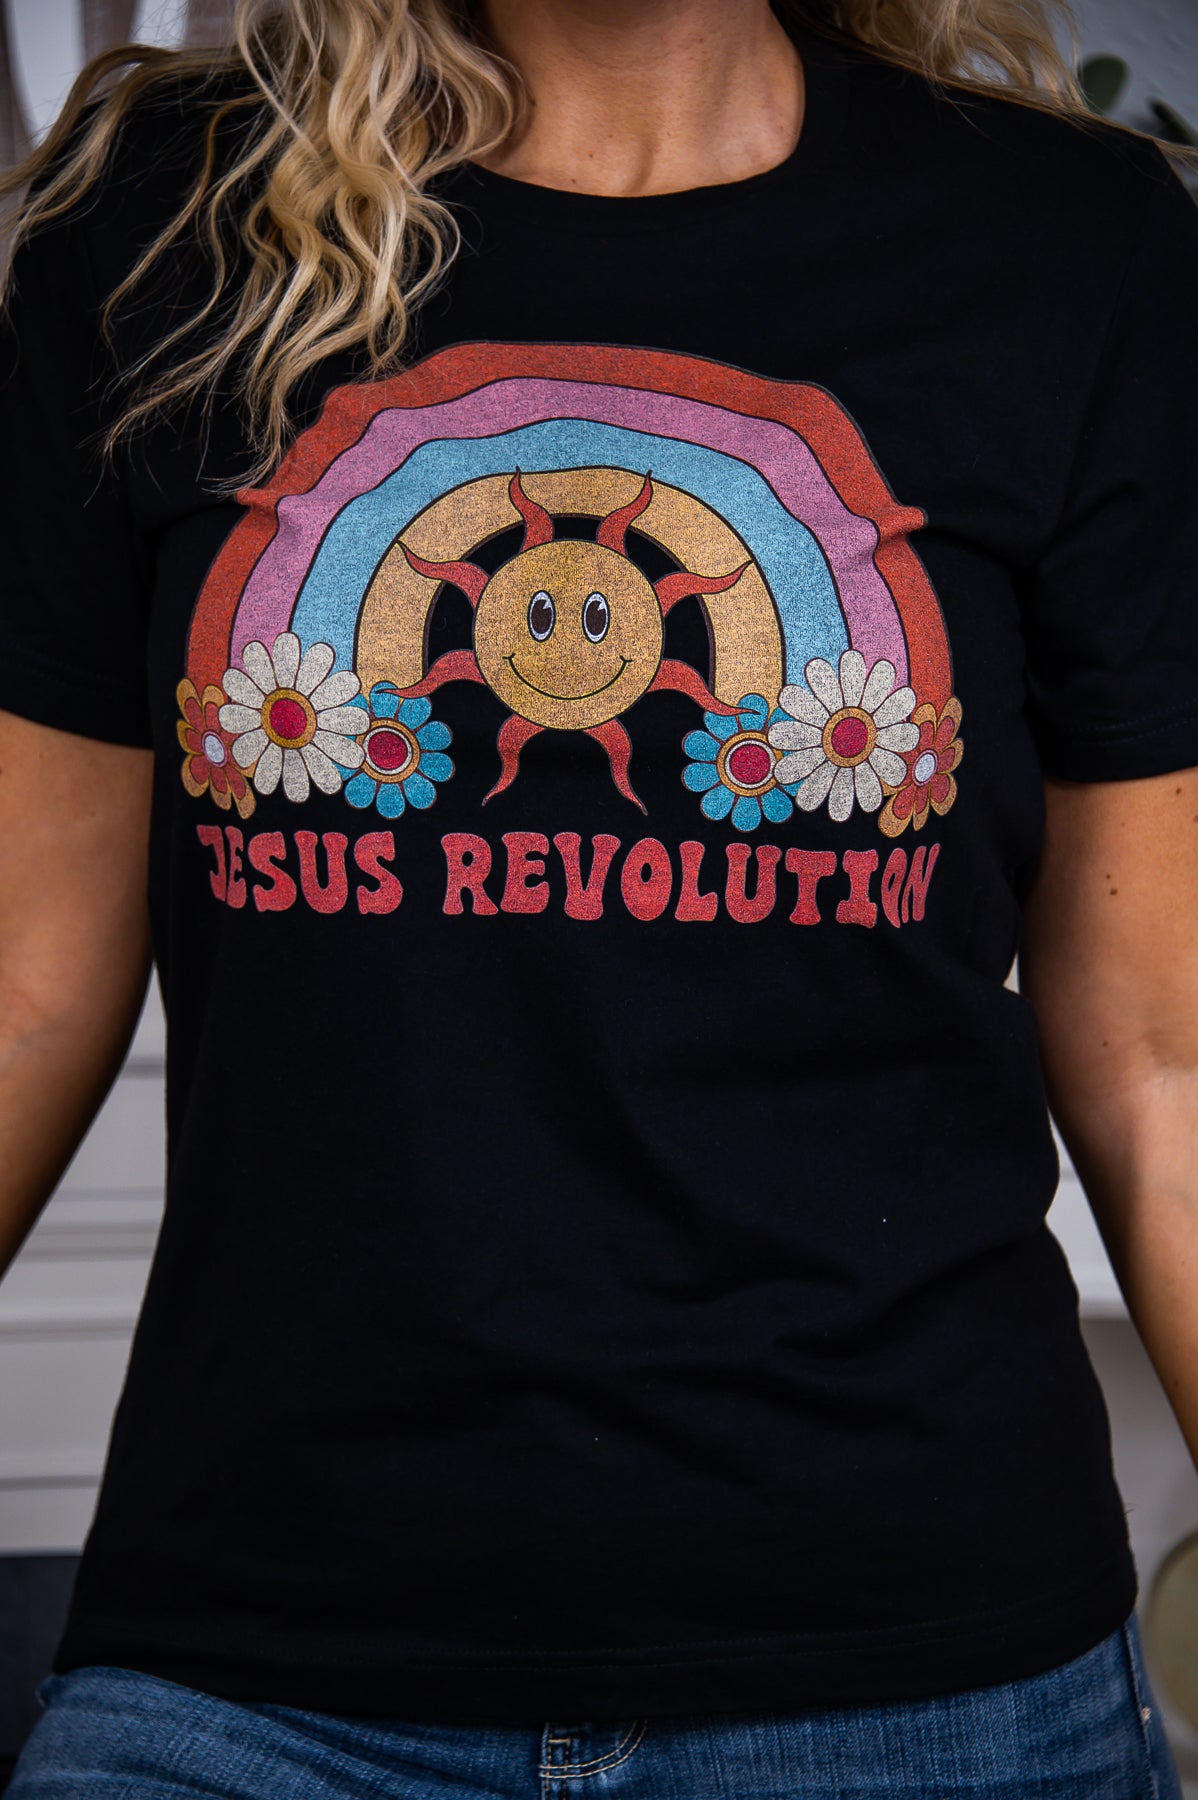 Jesus Revolution Solid Black Rainbow/Sun/Floral Graphic Tee - A2551BK